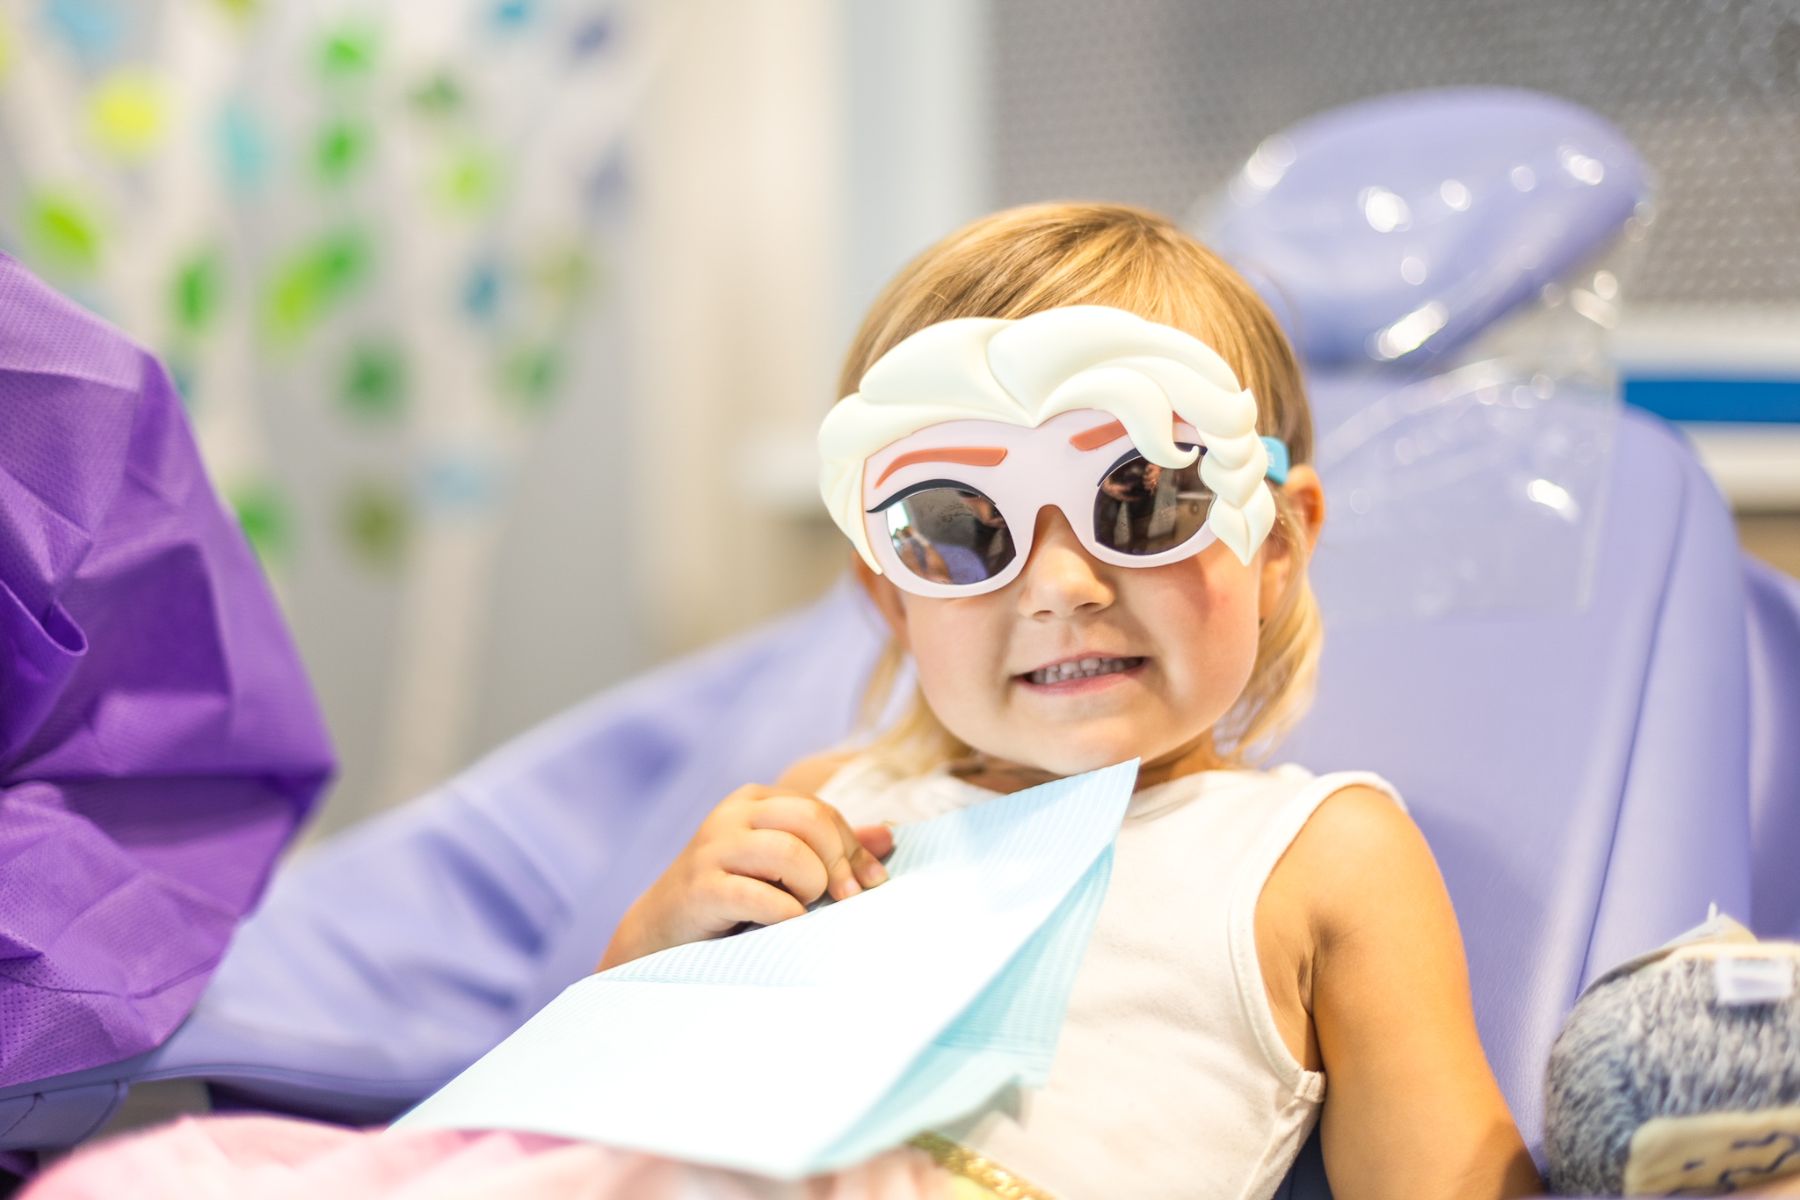 Sycamore Pediatric Dentistry prevention visit